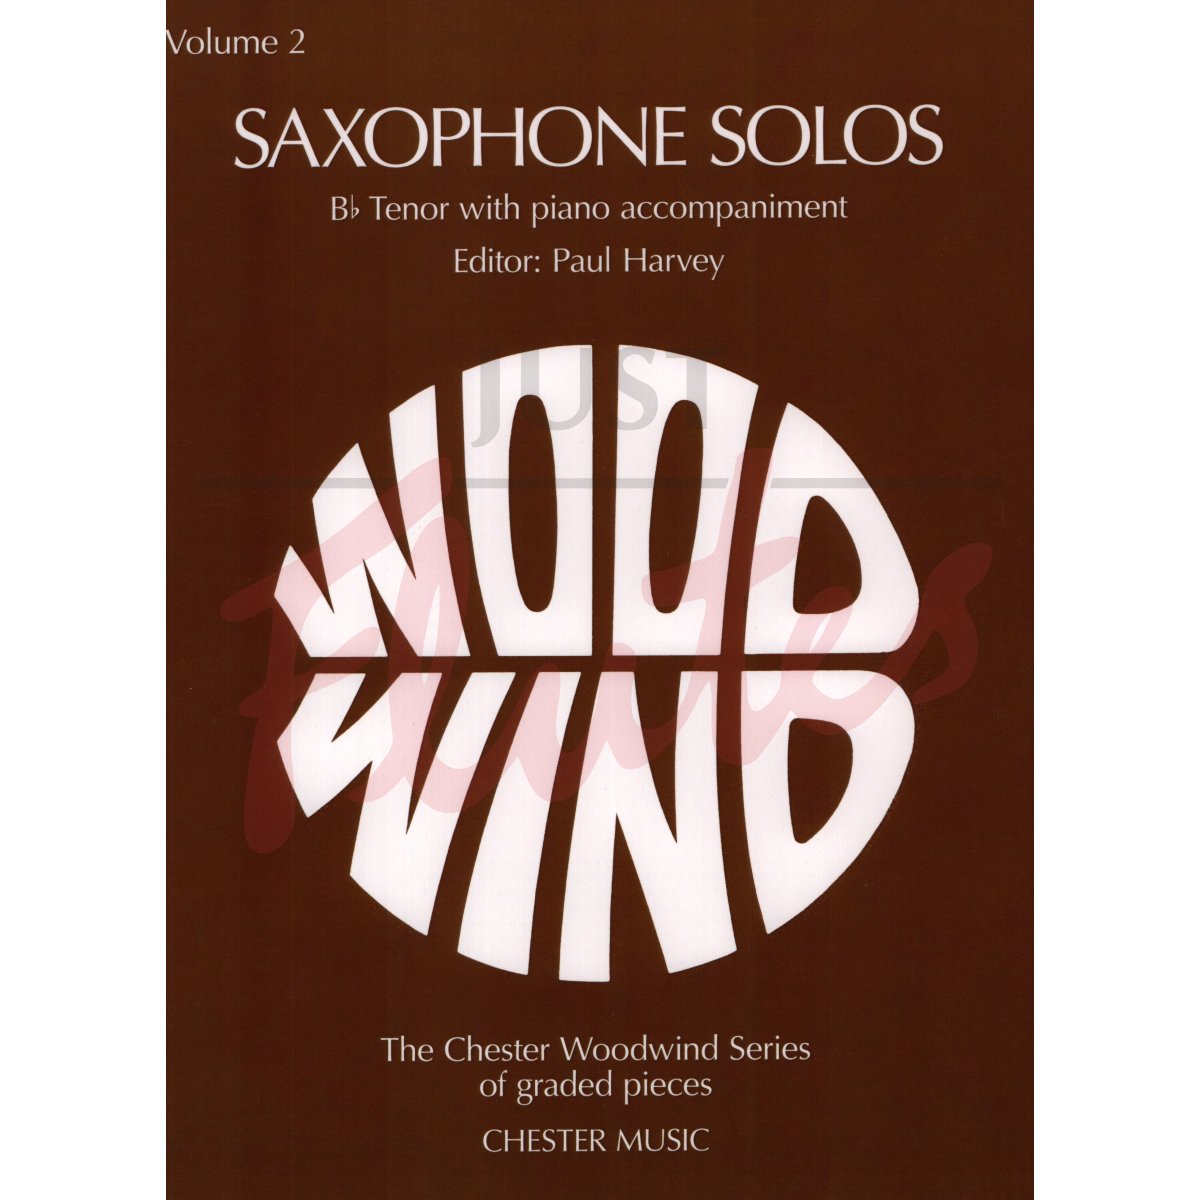 Tenor Saxophone Solos, Vol 2 with Piano Accompaniment